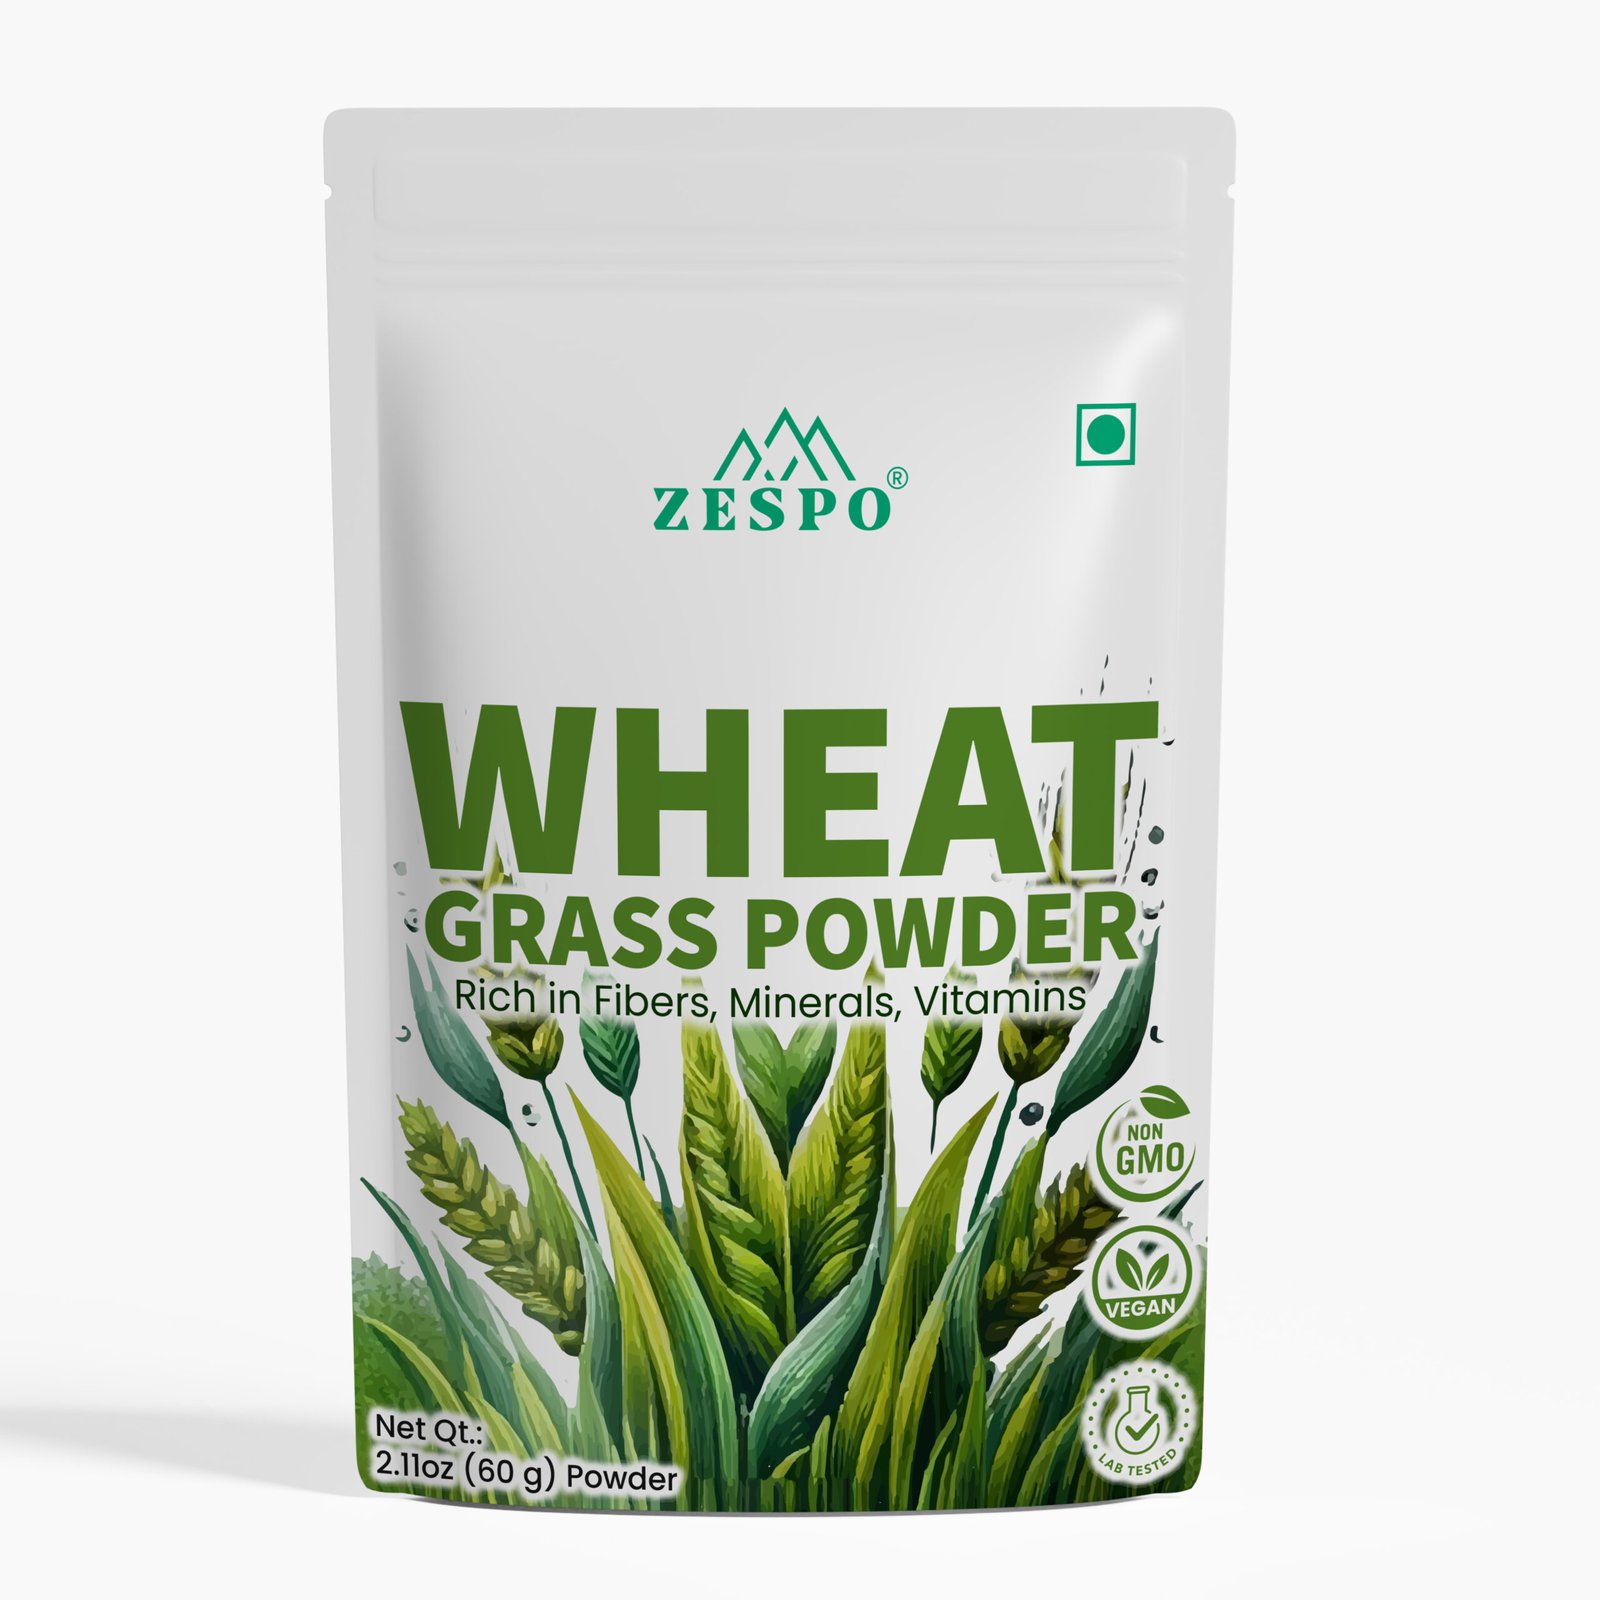 Wheat Grass powder